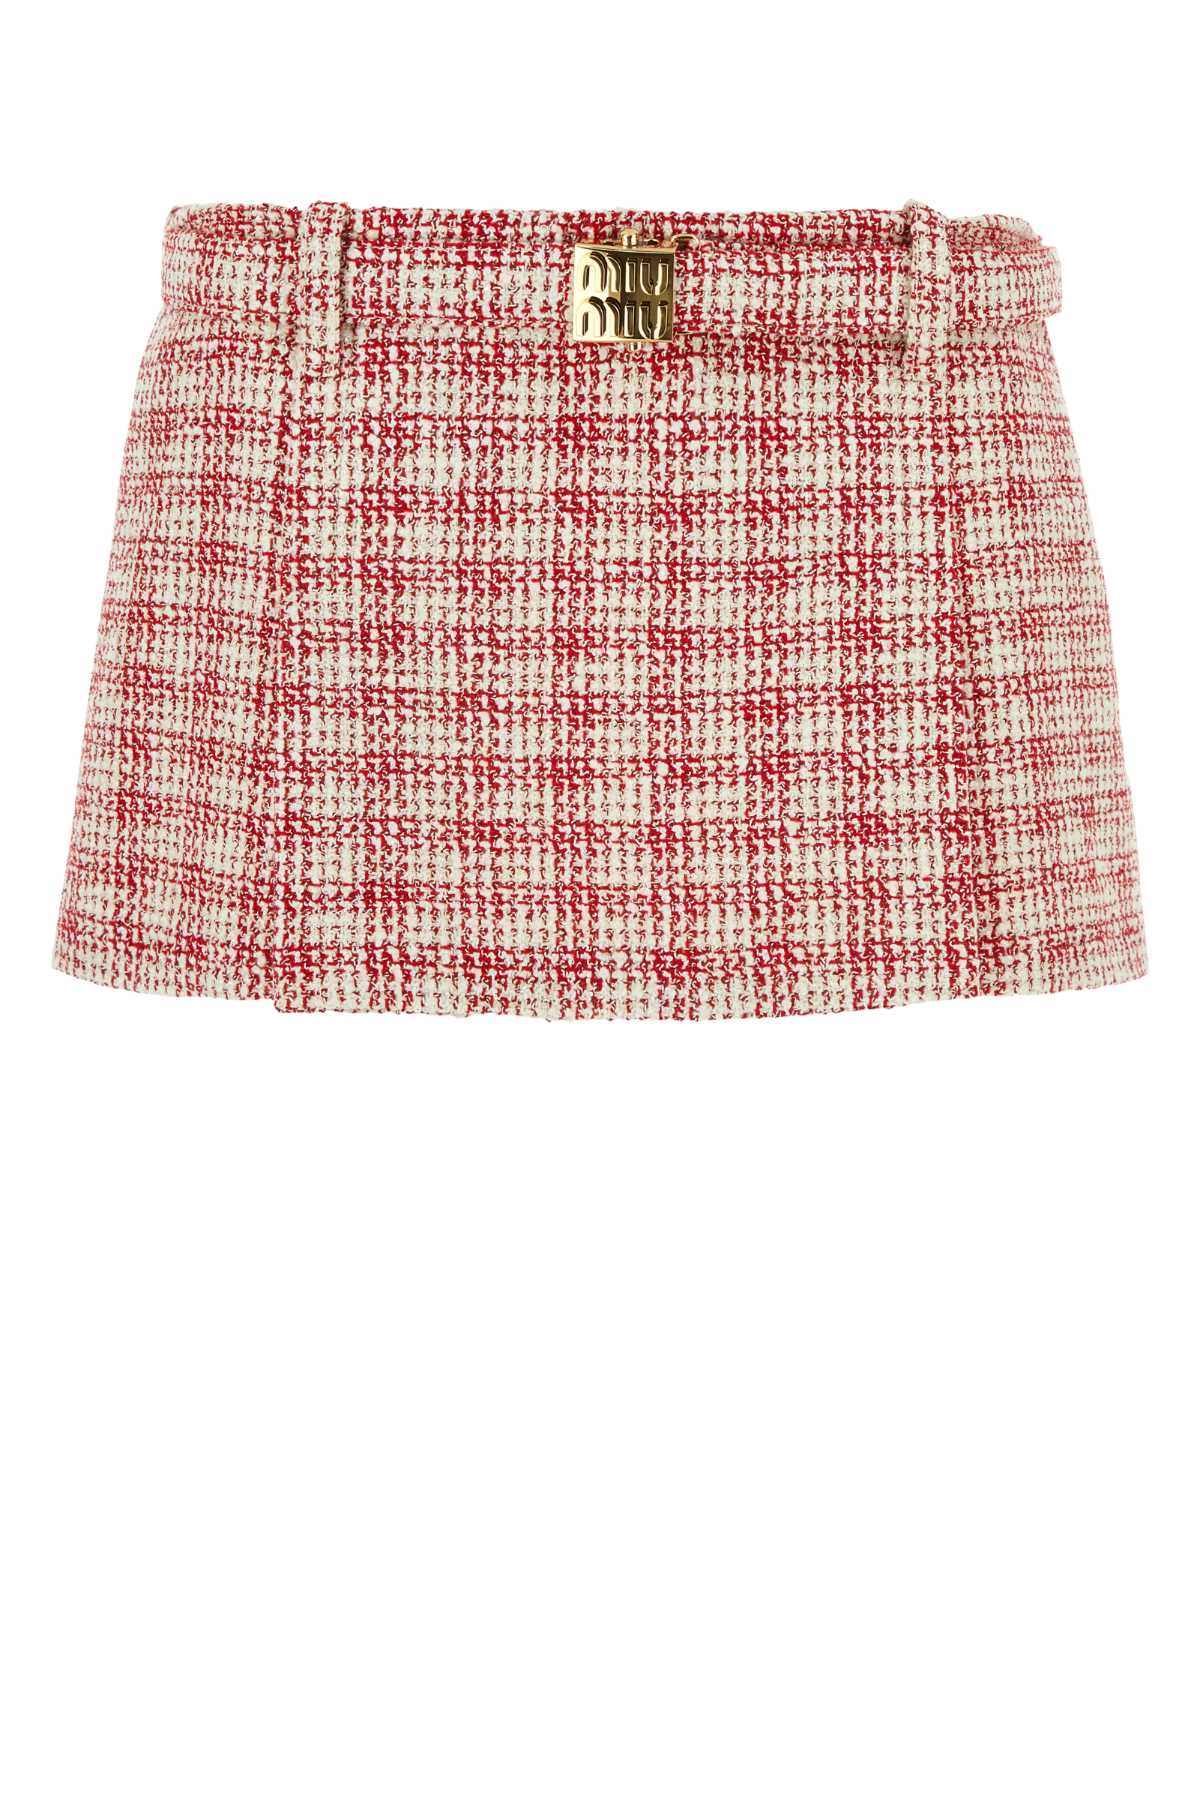 Miu Miu Embroidered Tweed Mini Skirt